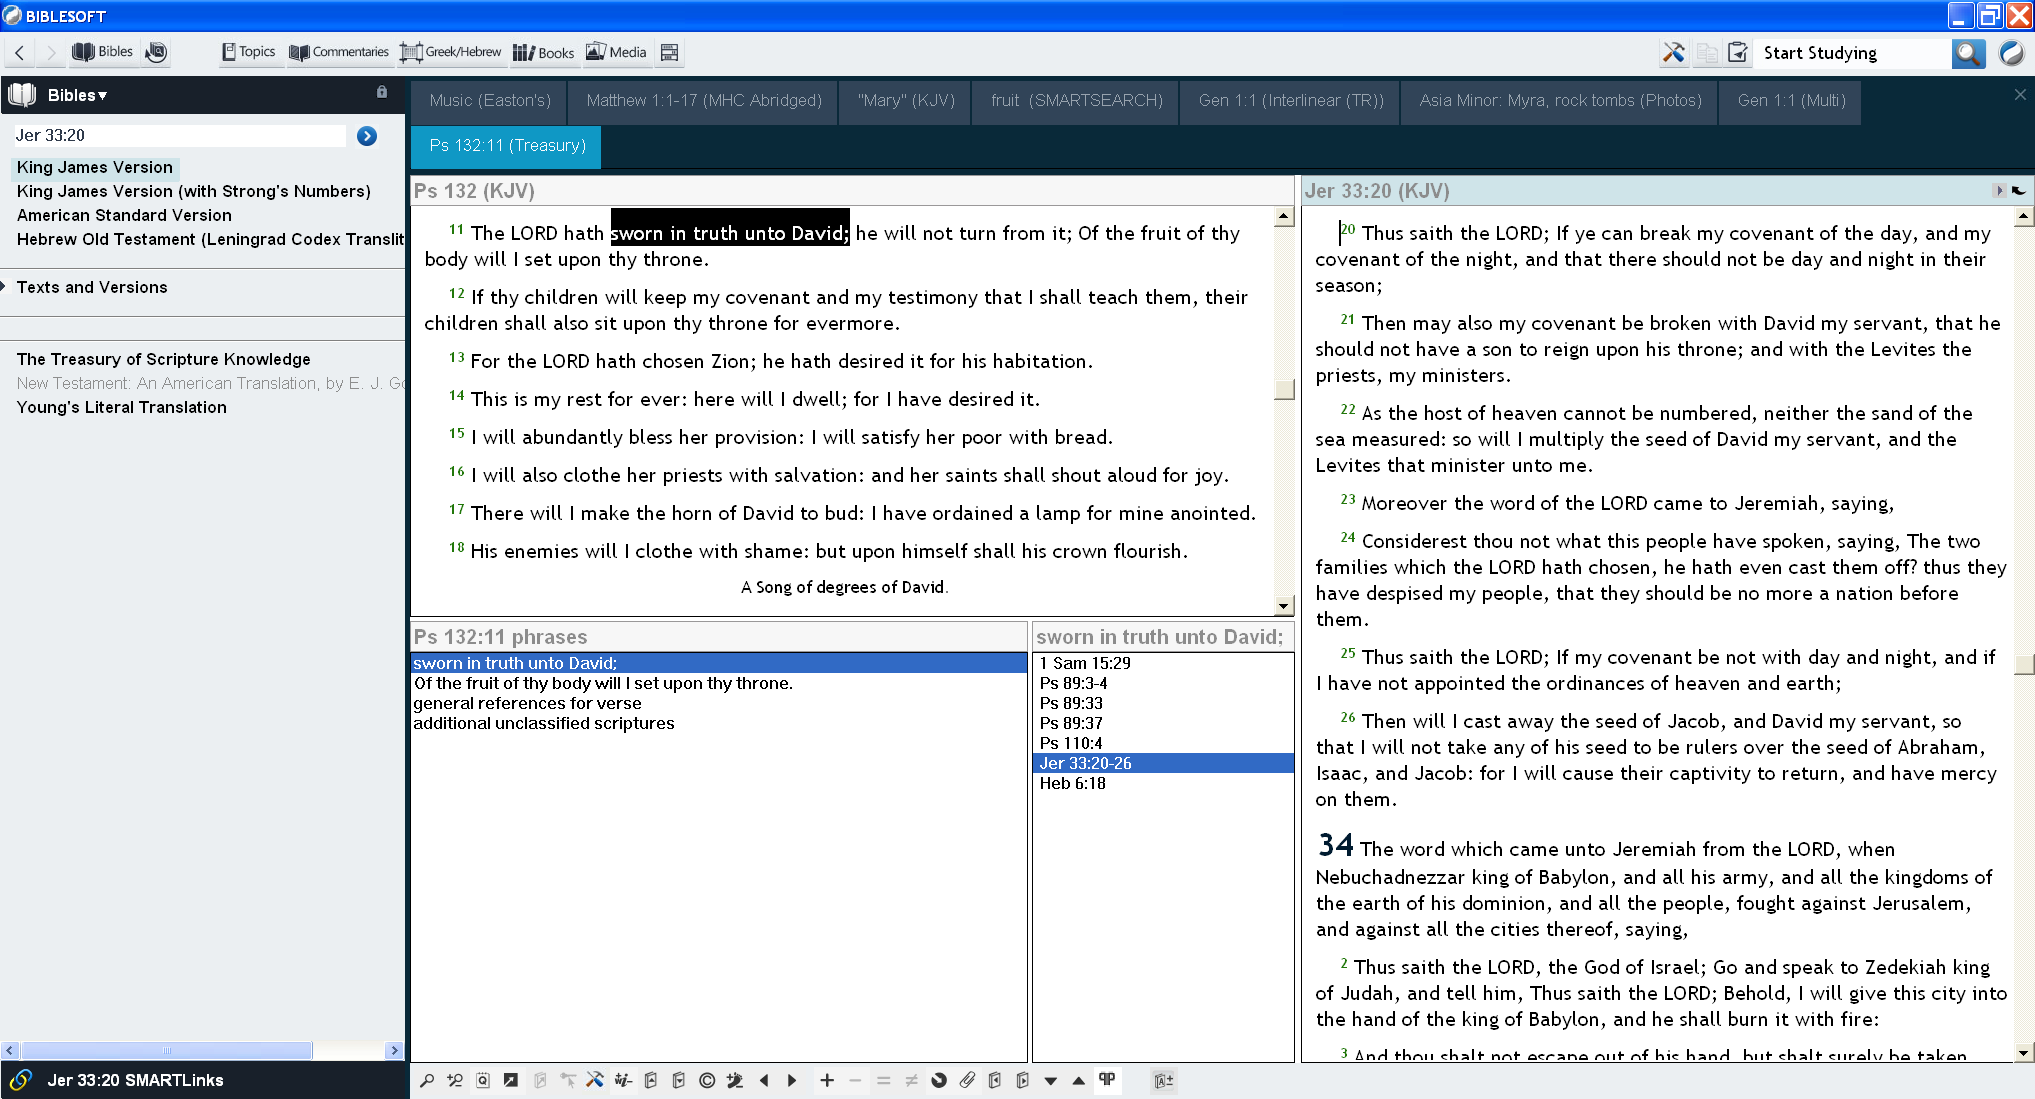 biblesoft pc study bible download